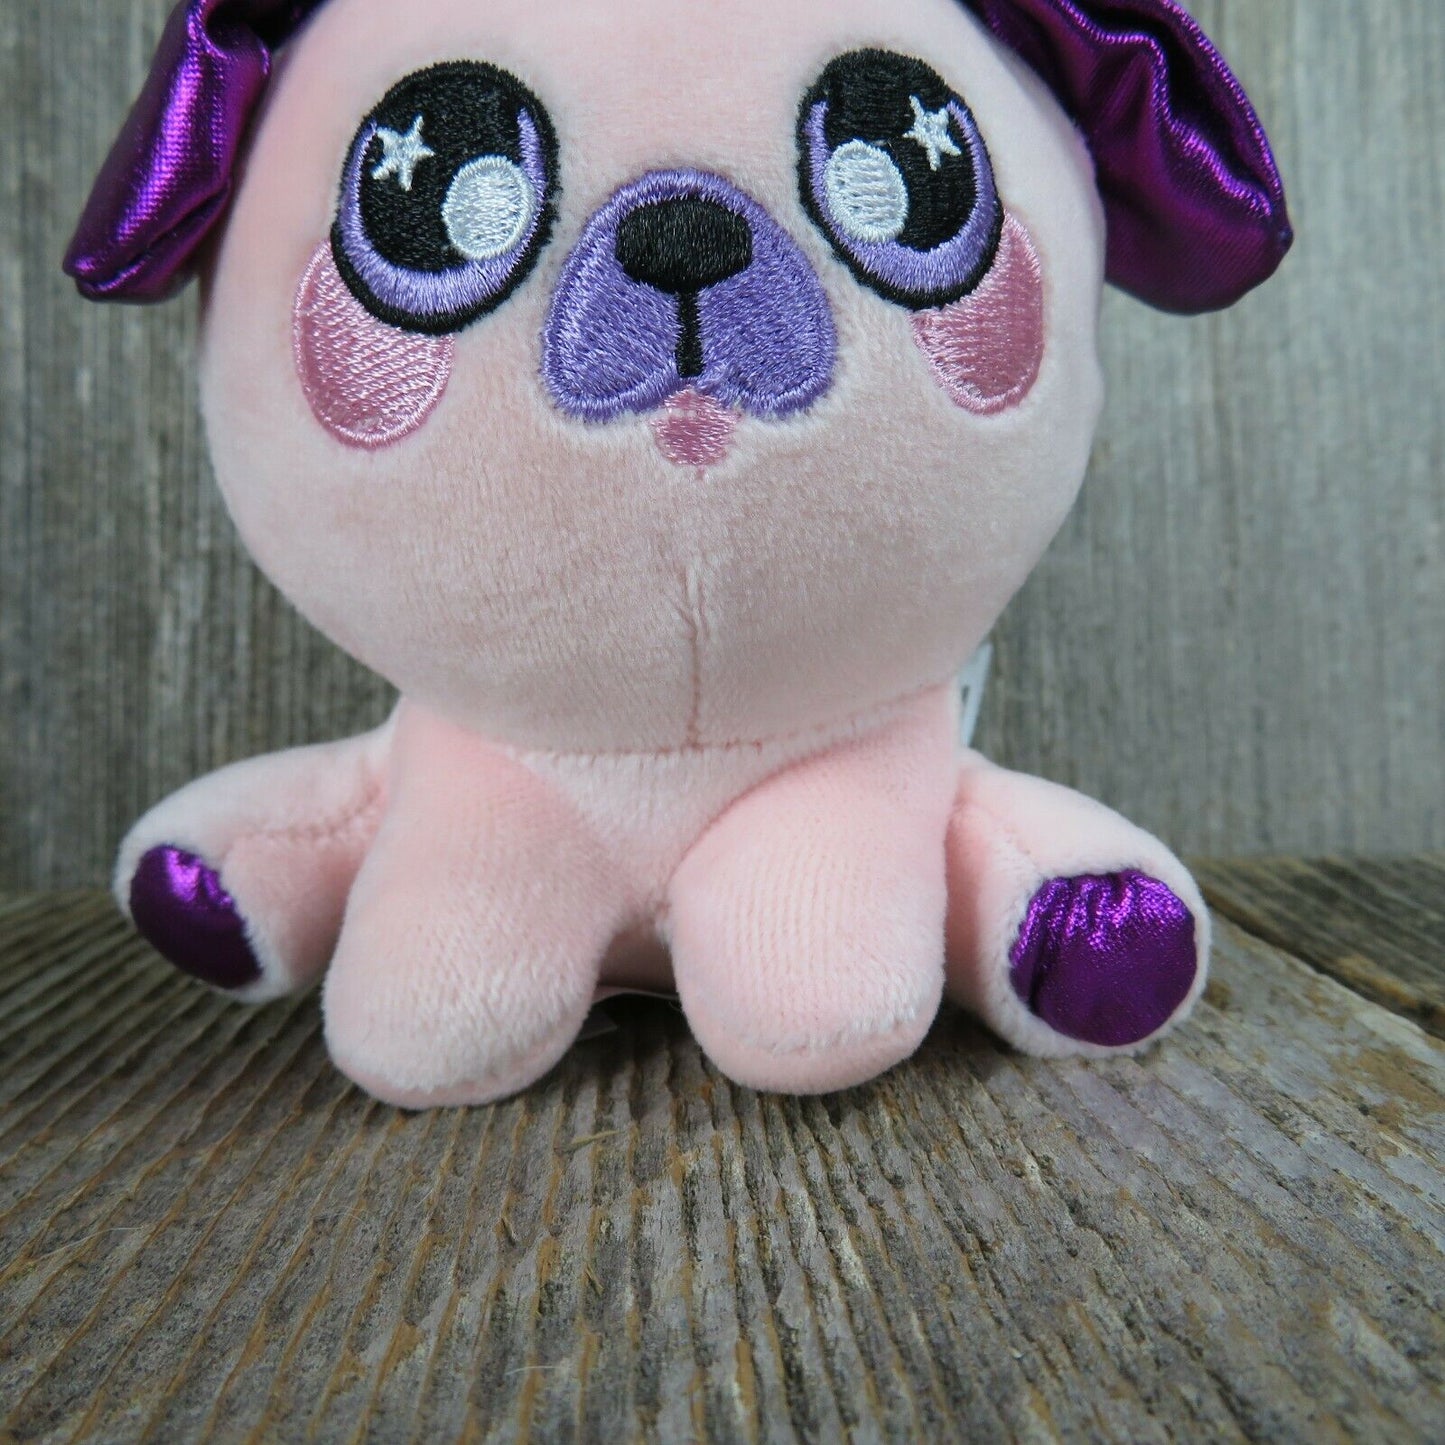 Squeezamals Pink Purple Plush Dog Squeeze Stuffed Animal Stress Pet Puppy